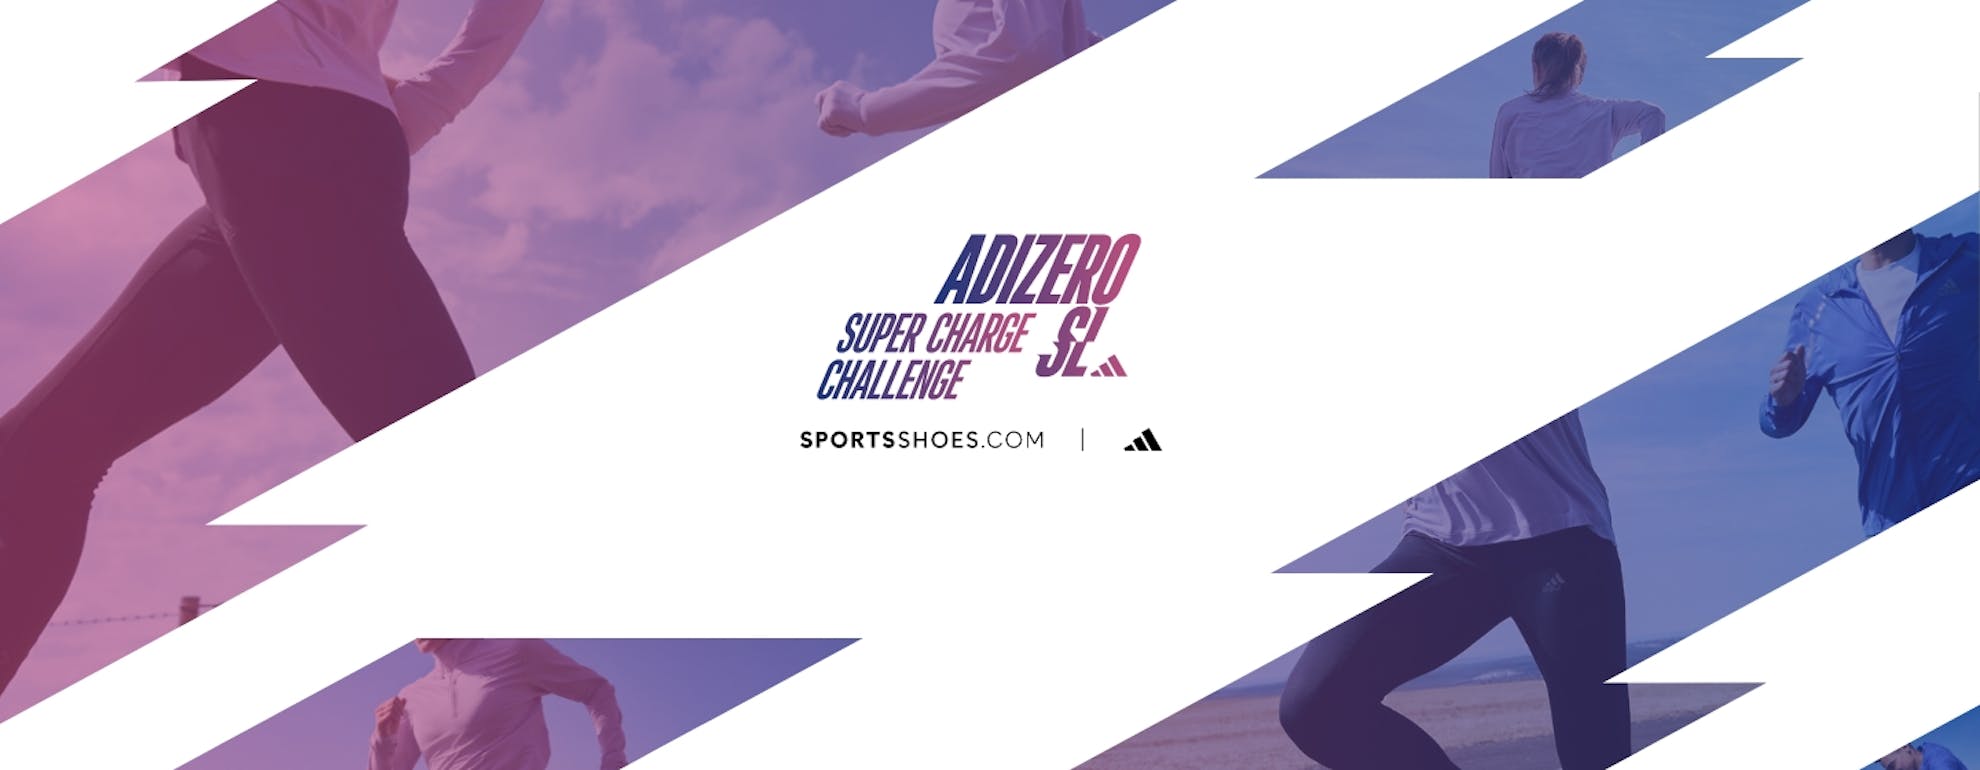 adidas SUPER CHARGE 30k Strava Challenge